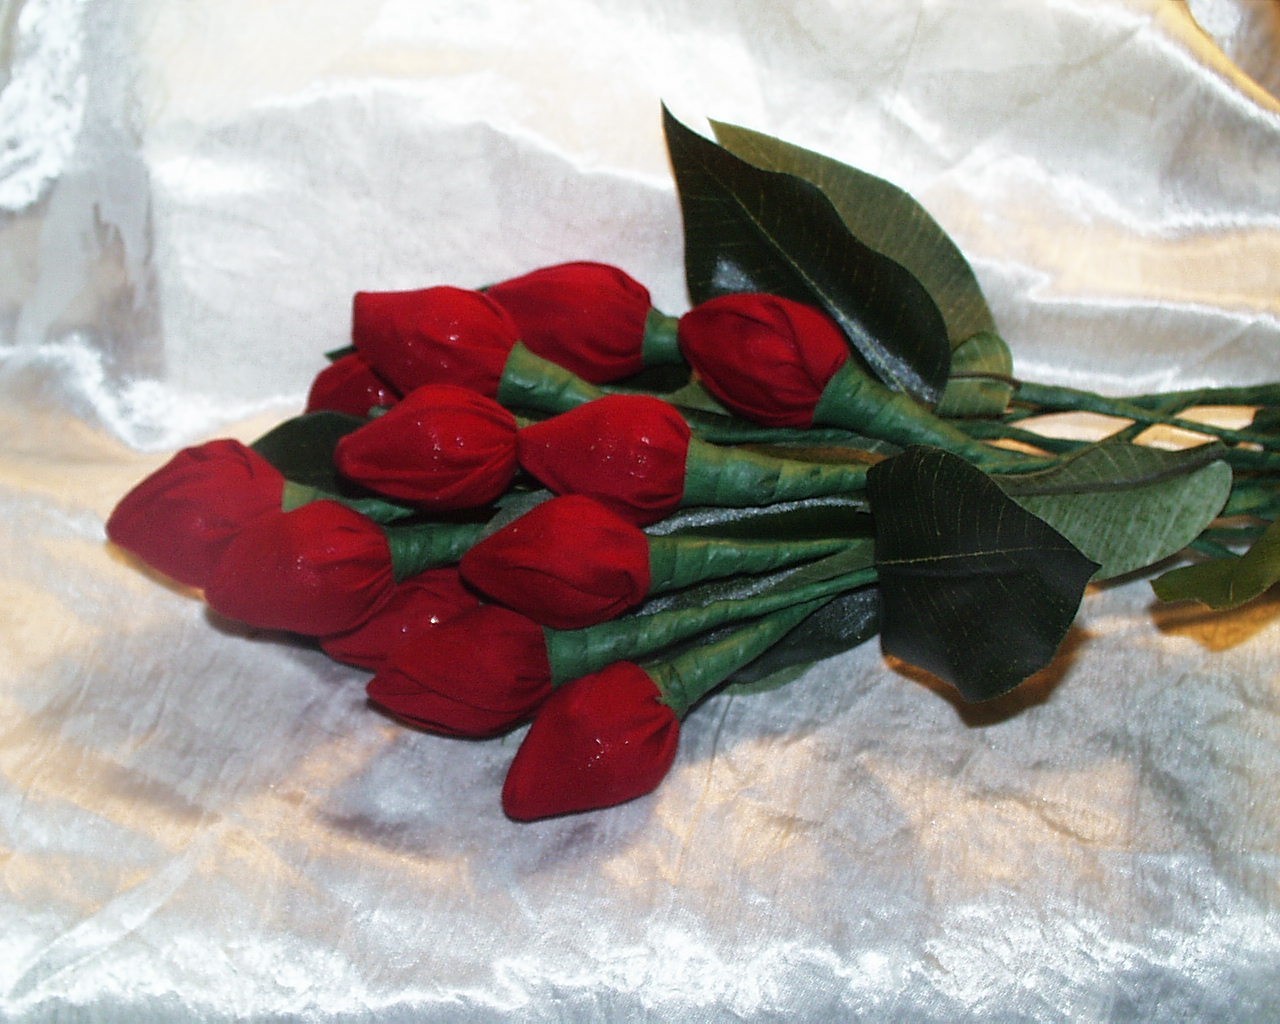 Hershey Kiss Roses